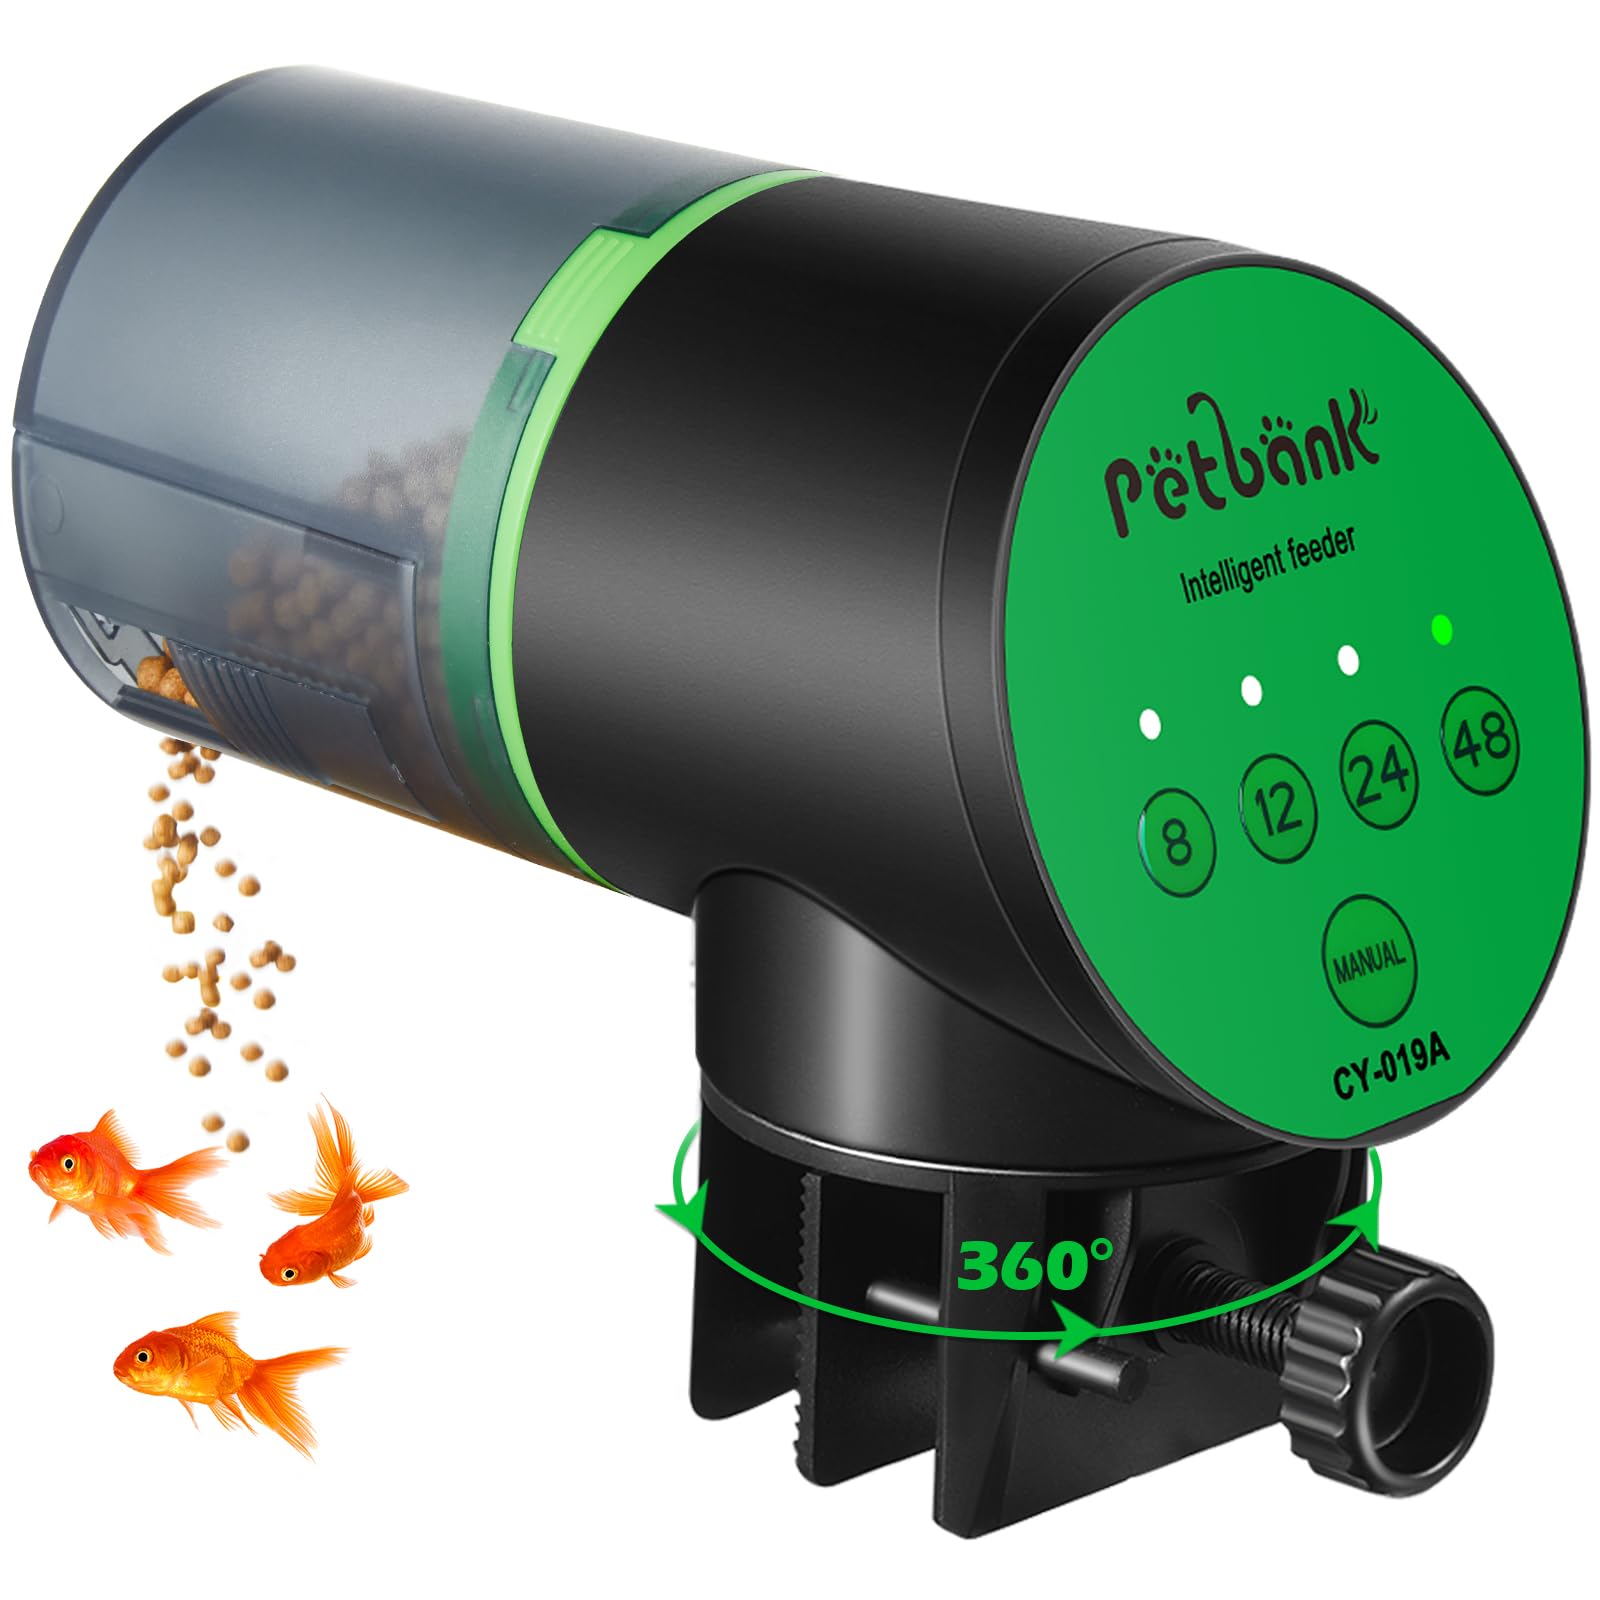 Petbank Automatic Fish Feeder for Aquarium – Convenient Battery-Operated Dispenser